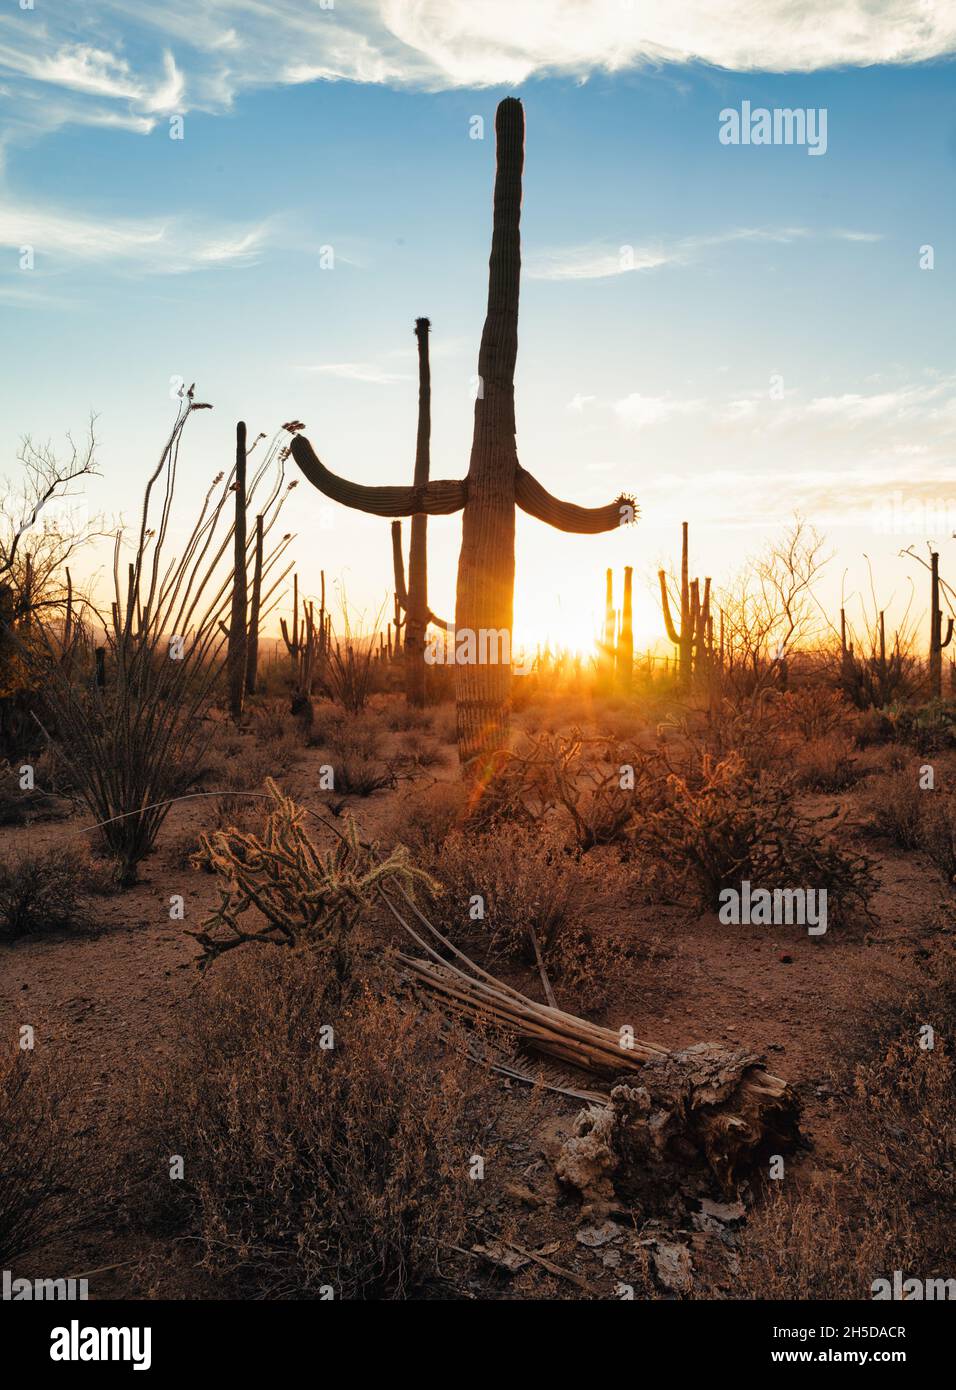 Fallen dead saguaro in front of live ones at sunset in Arizona desert Stock Photo